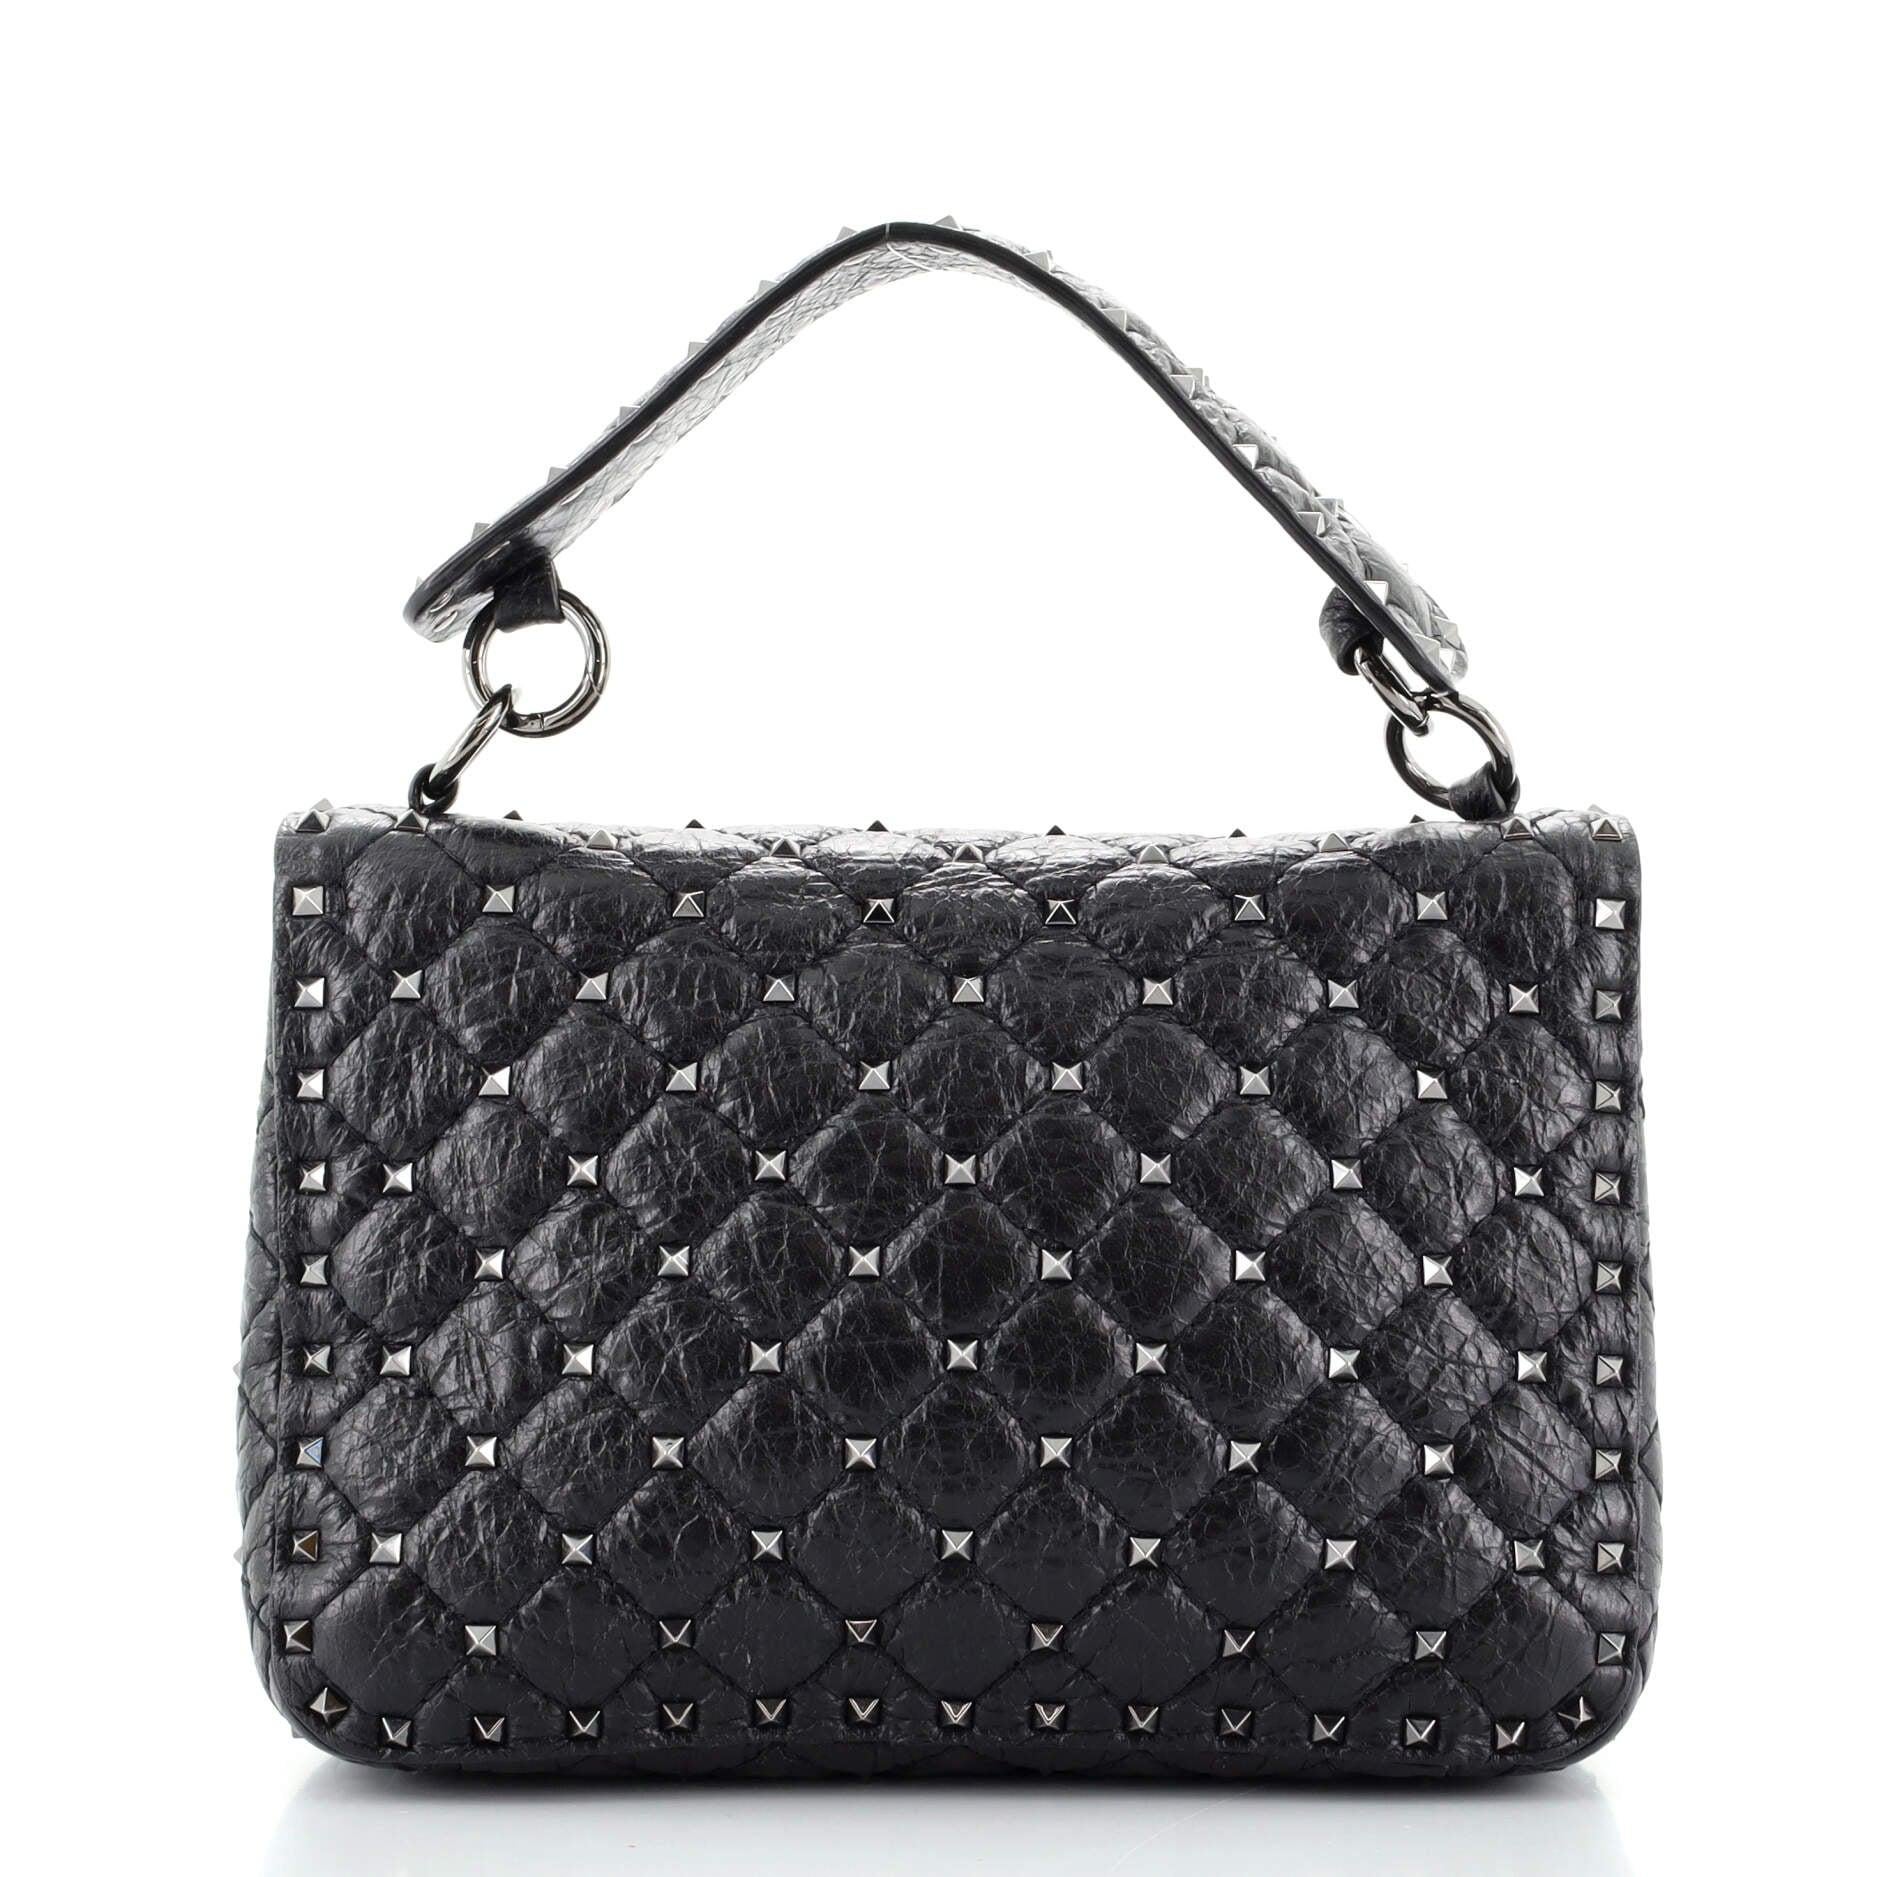 Black Valentino Rockstud Spike Flap Bag Quilted Leather Medium